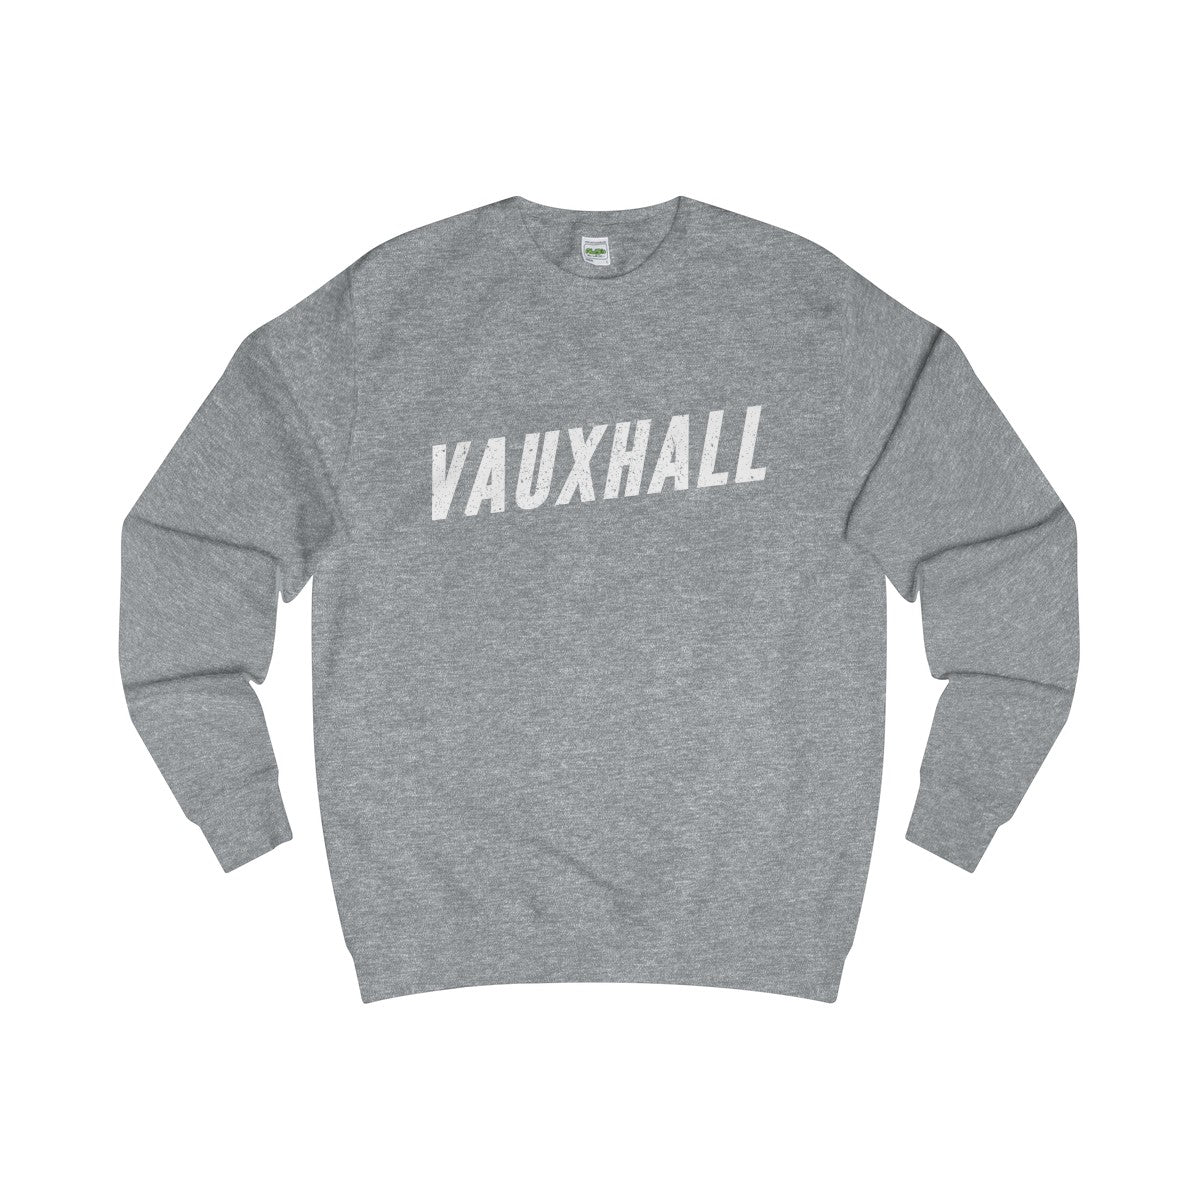 Vauxhall Sweater